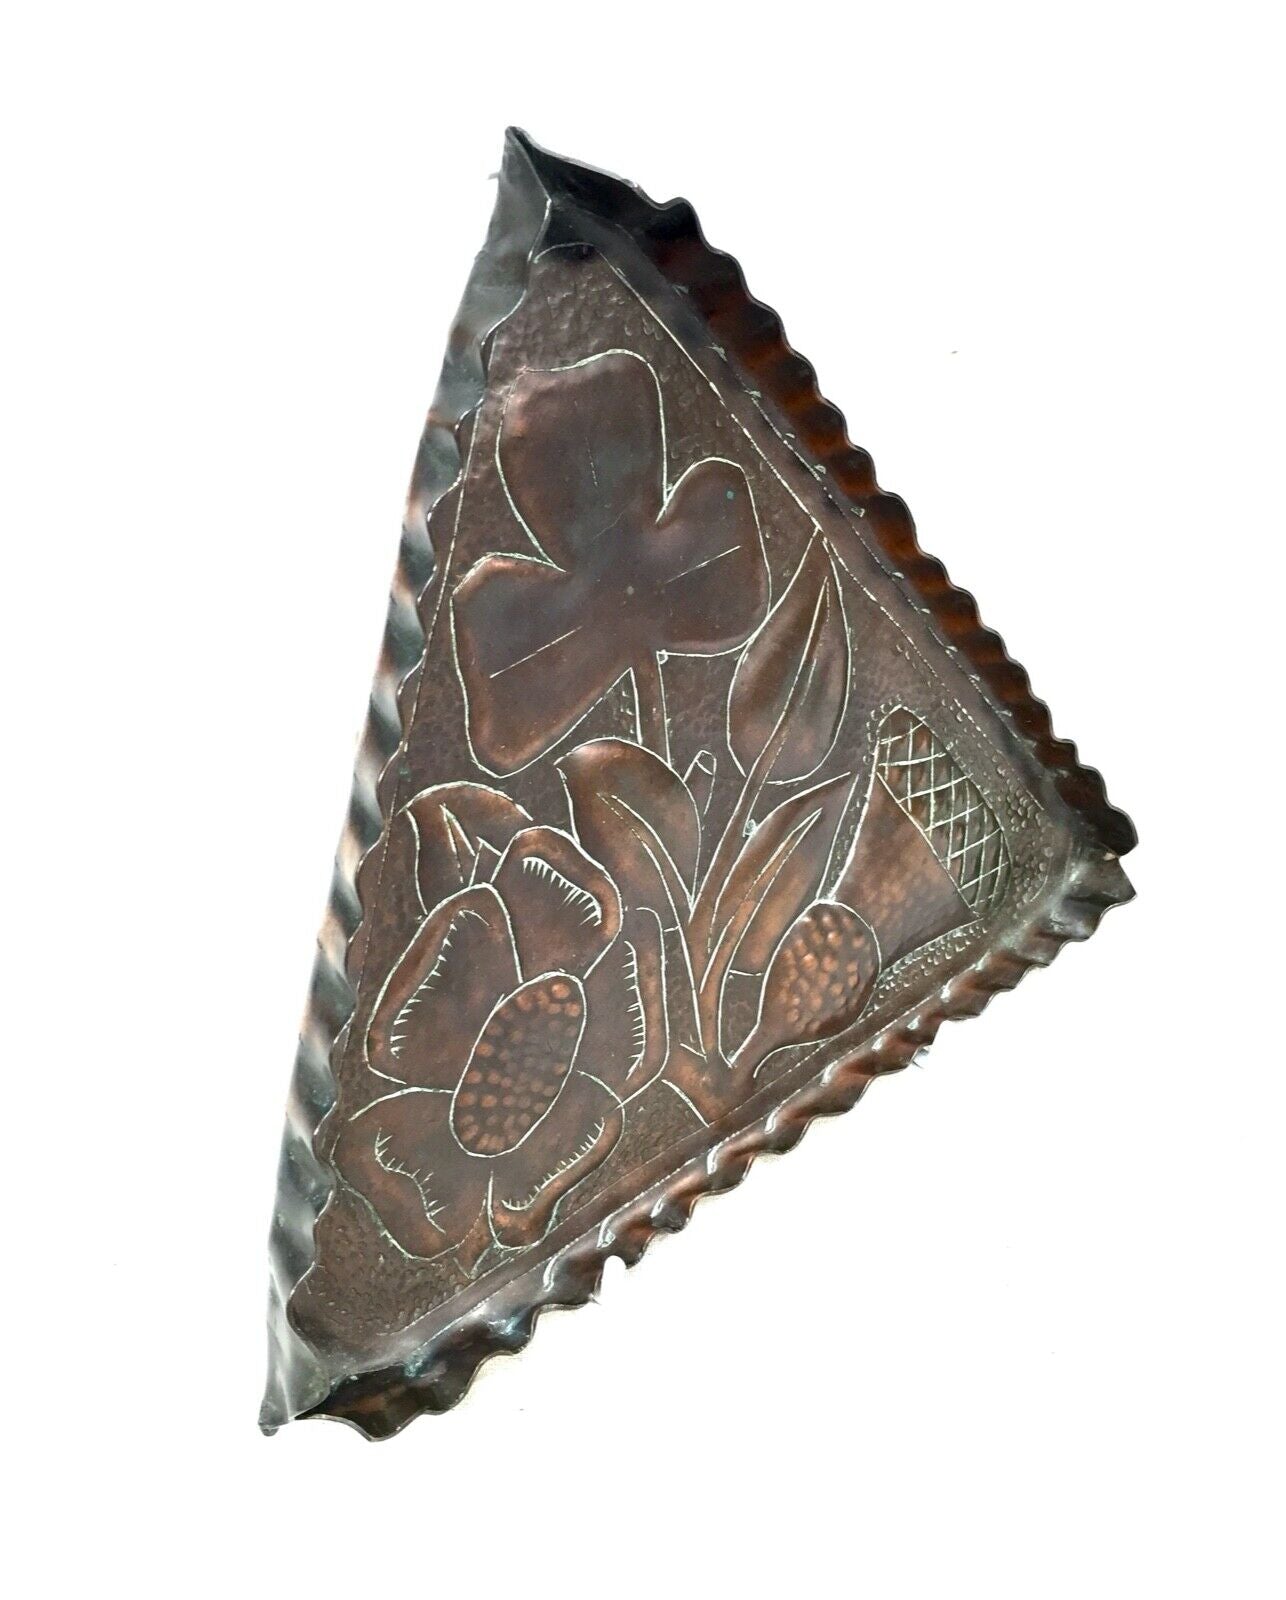 Antique Copper Bowl / Dish / Keys & Coins Tray c.1900 / Arts & Crafts